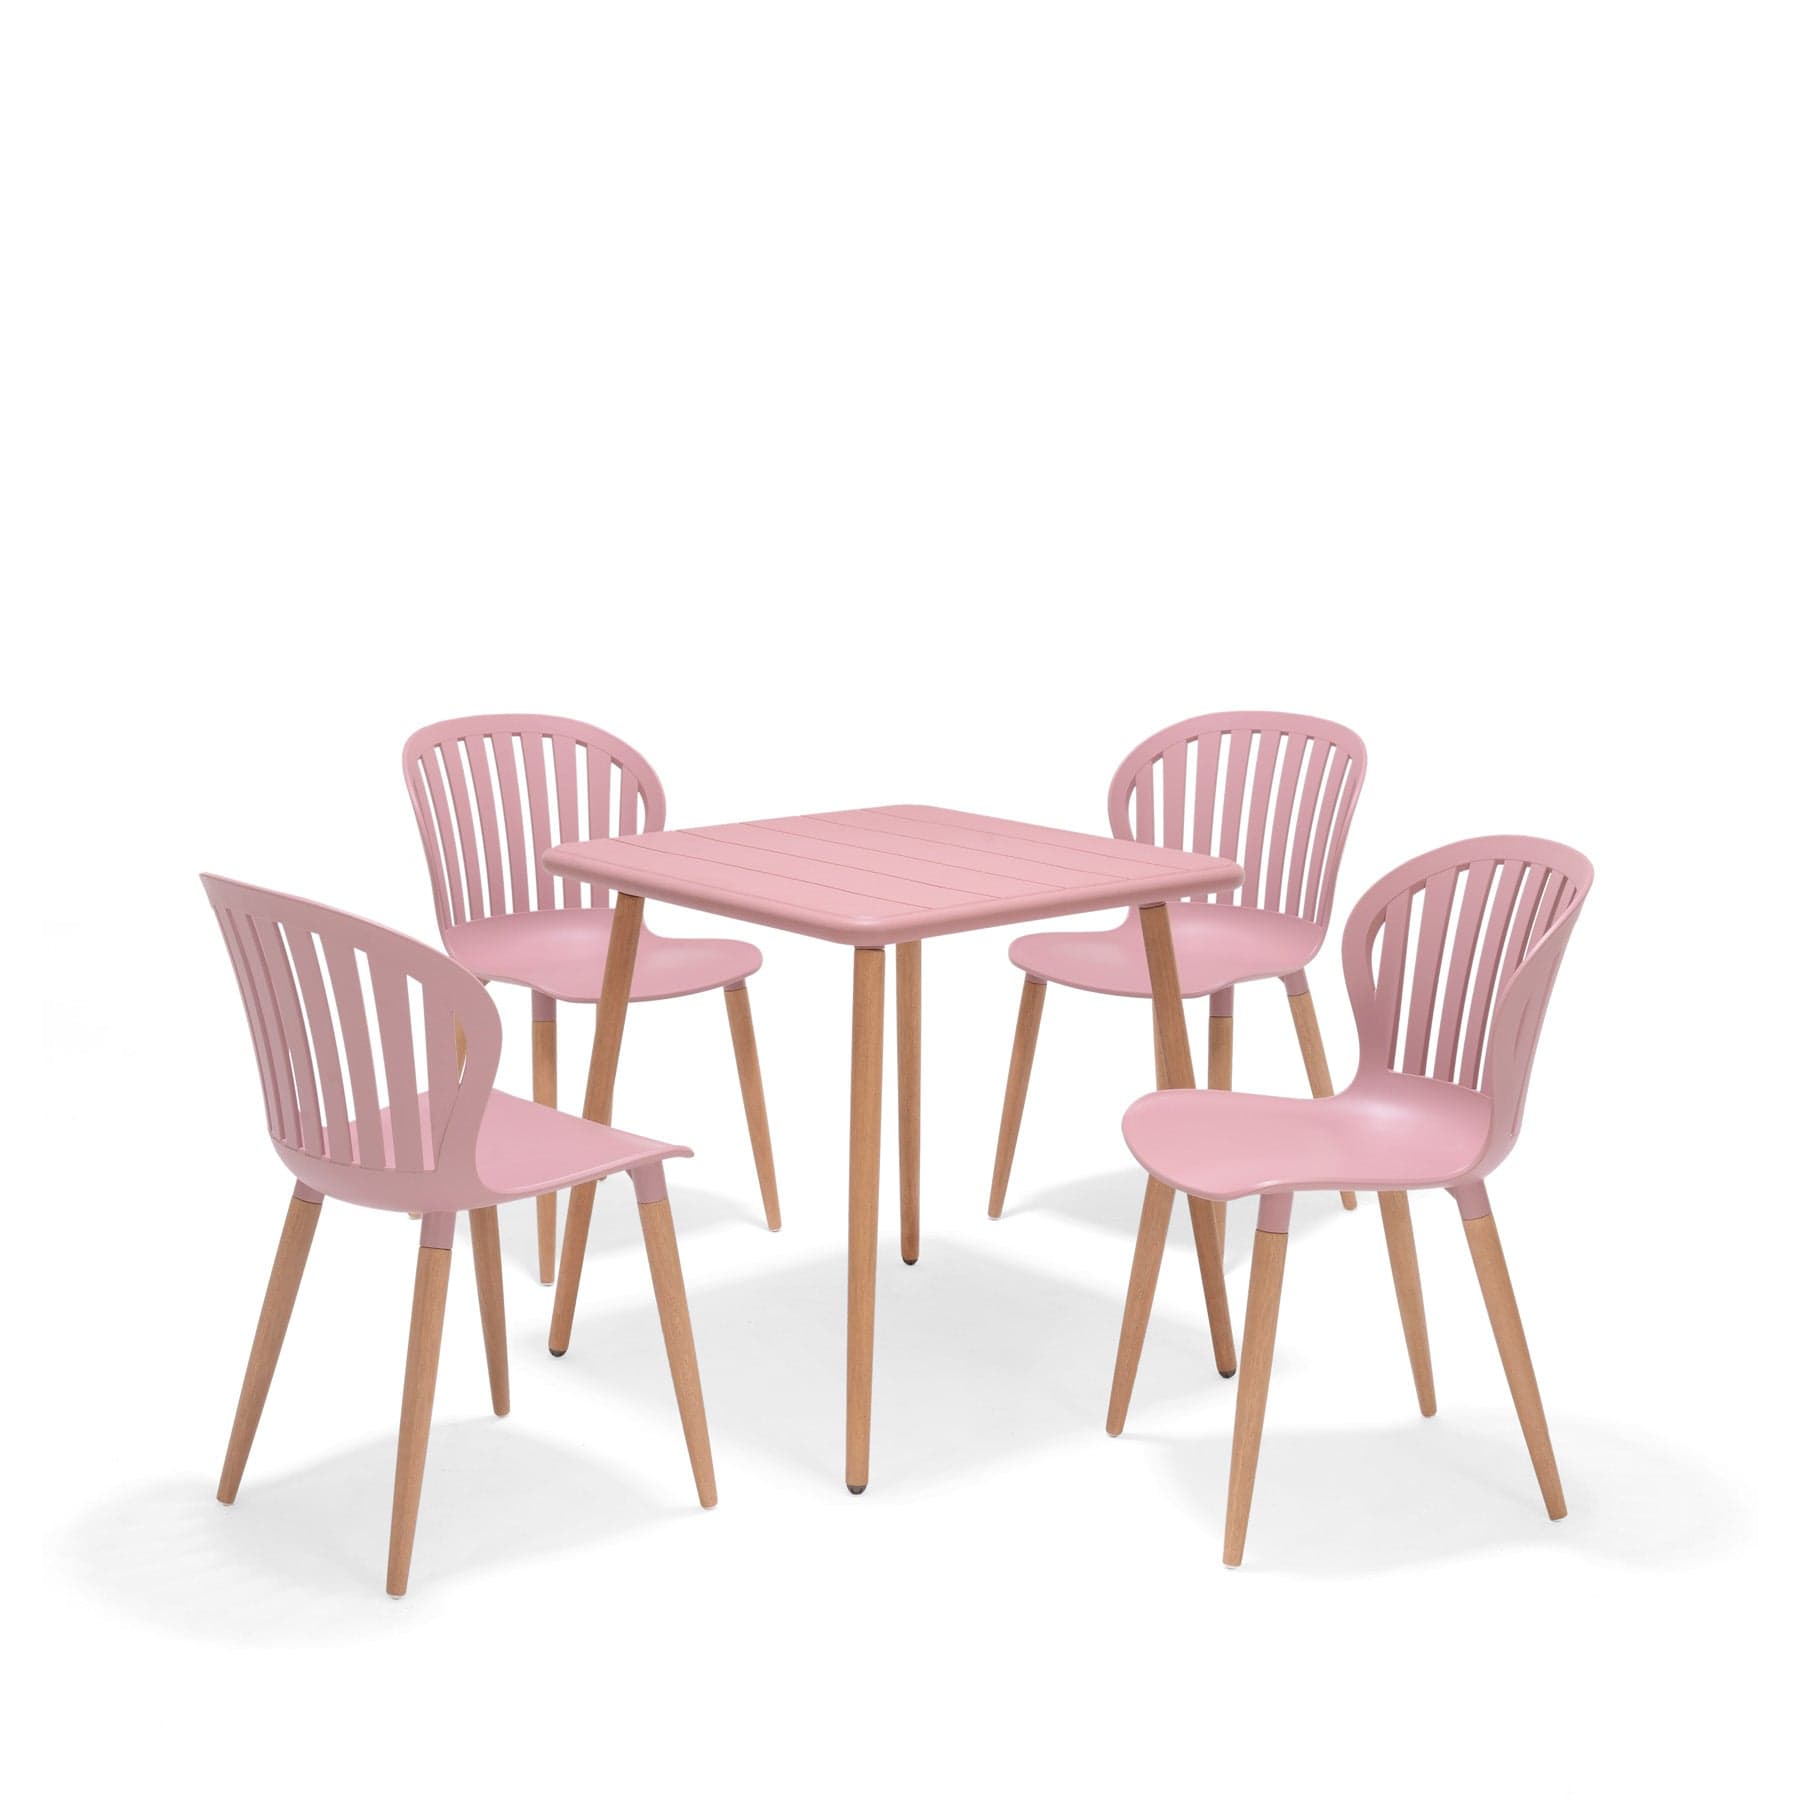 Social Plastic® nassau side chair 4 seater dining set